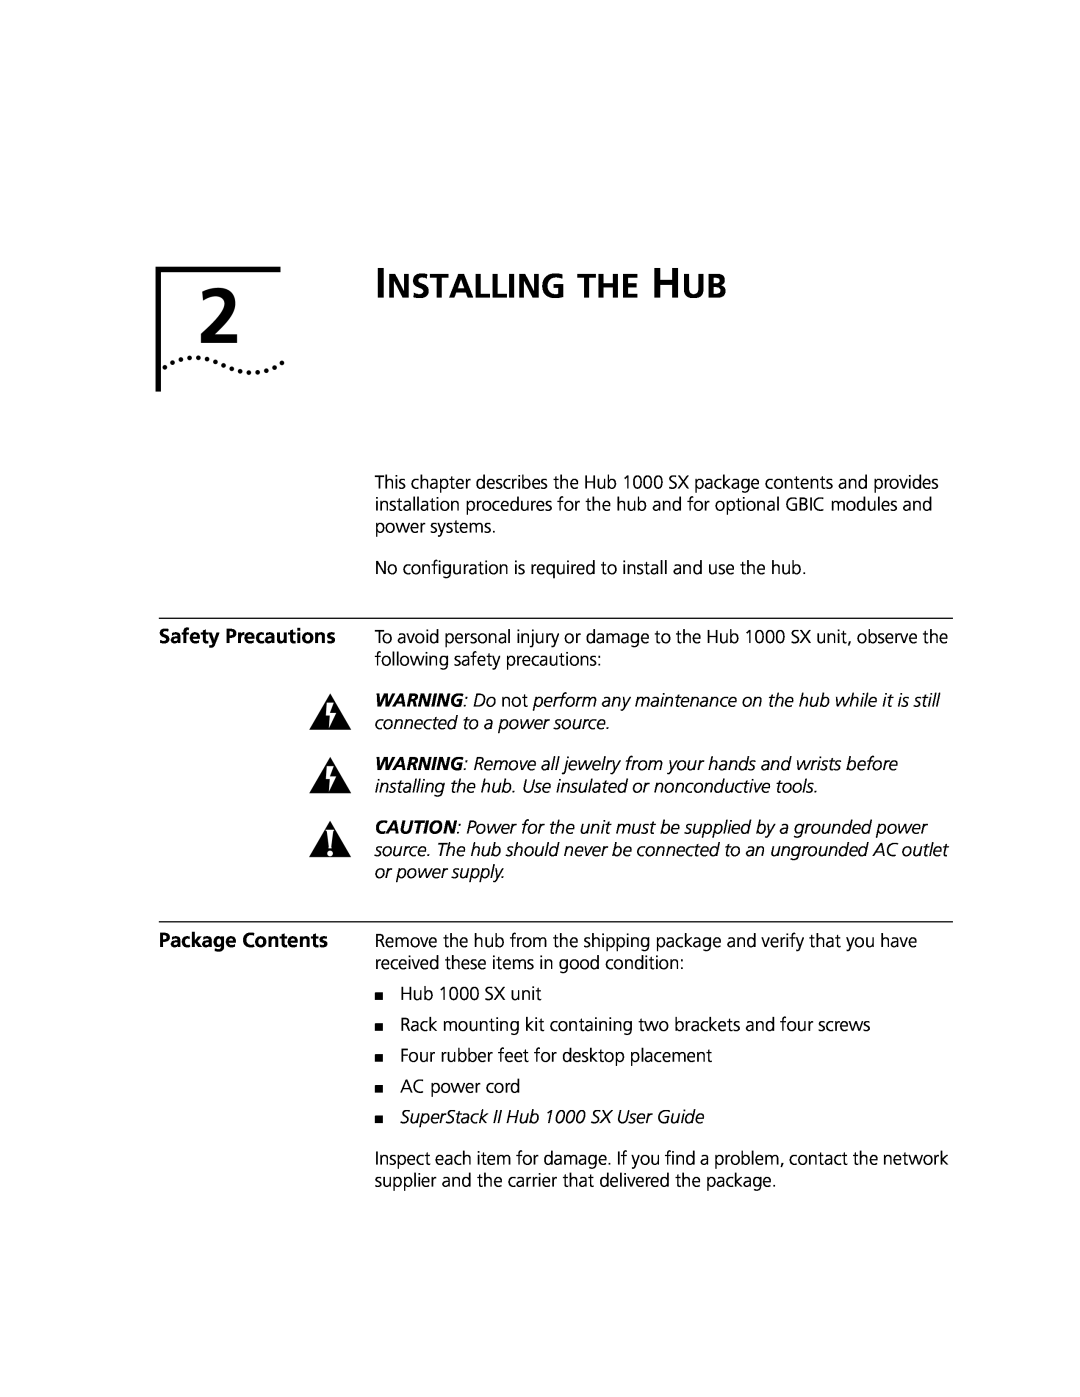 3Com manual Installing The Hub, SuperStack II Hub 1000 SX User Guide 